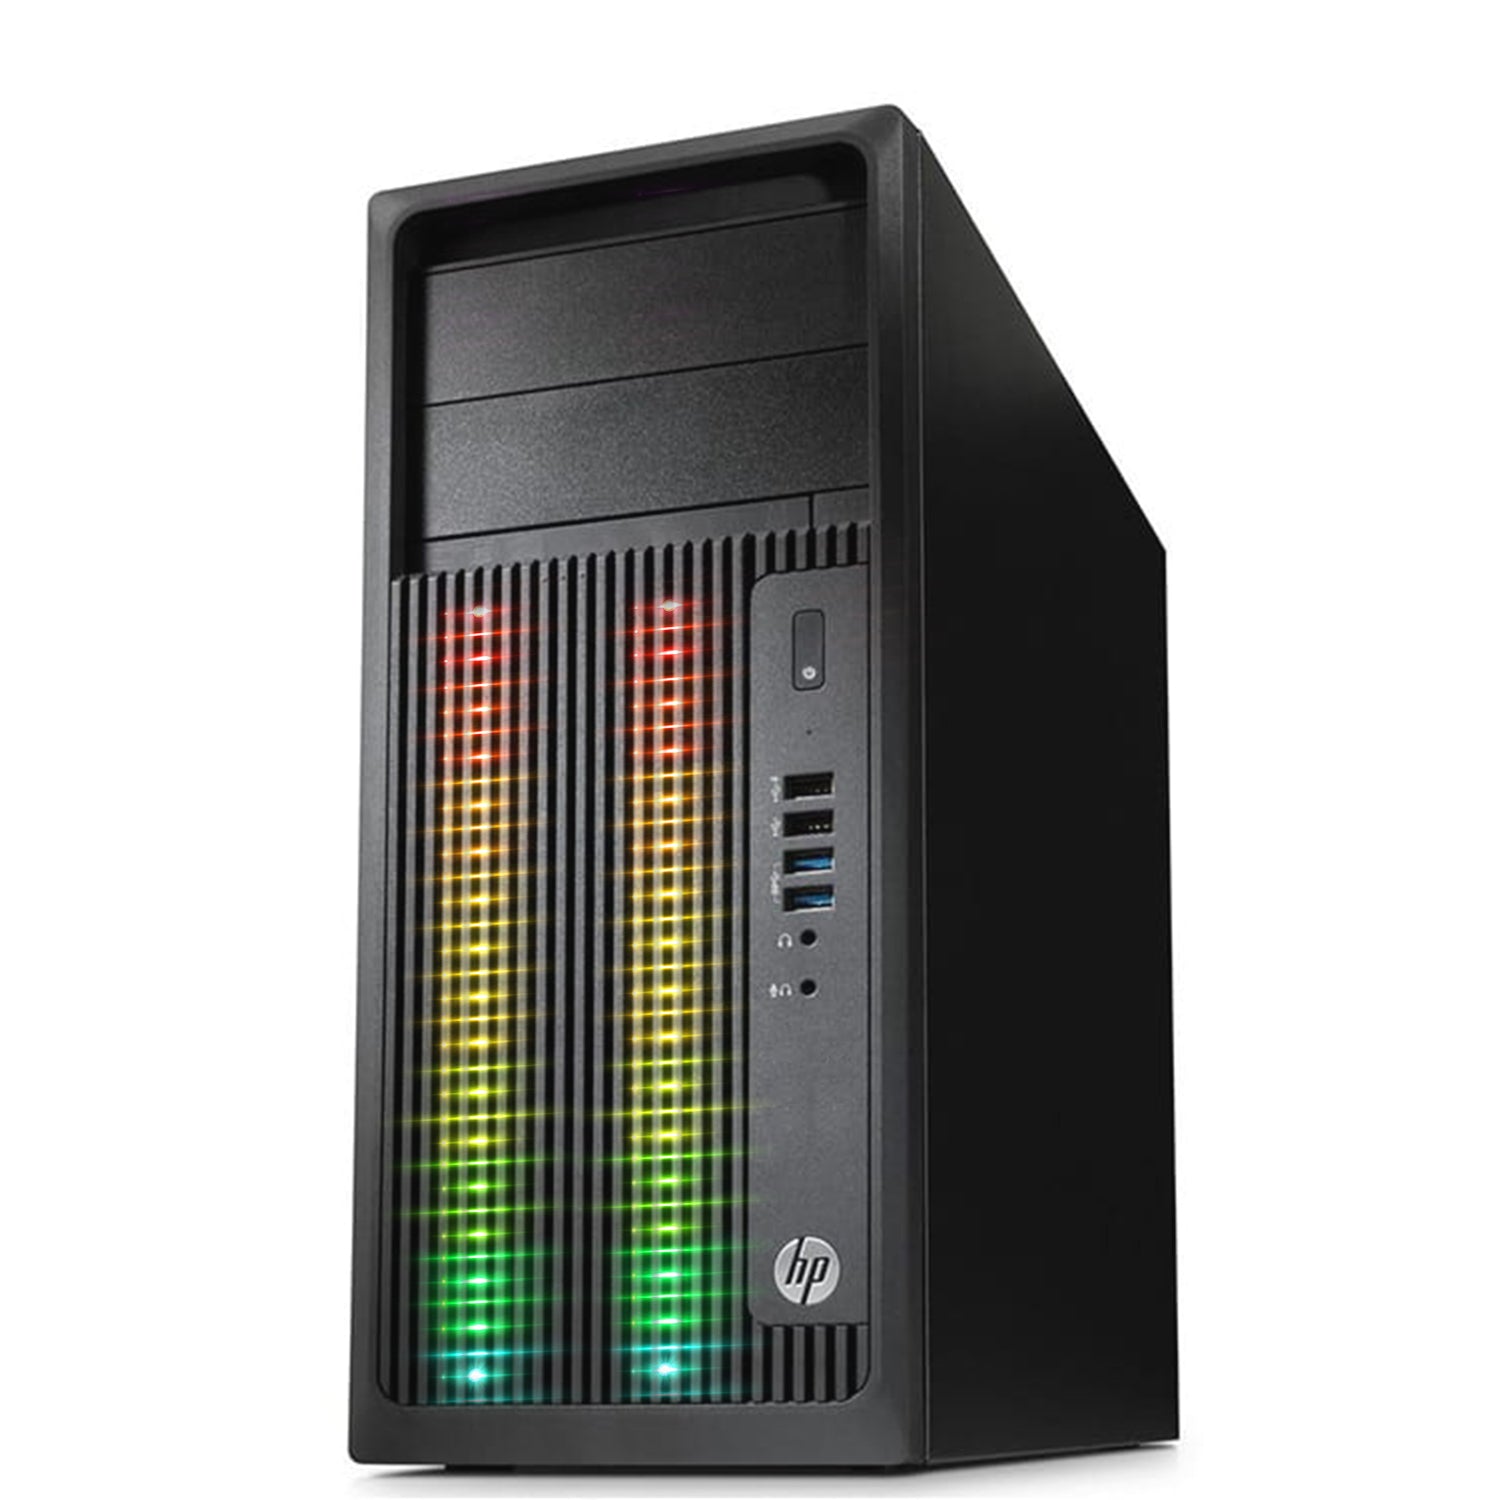 HP Z240 Tower Workstation RGB Gaming PC | GeForce RTX 3050 6GB GDDR6 | Intel Core i5/i7 - 6th Gen | 16GB - 32GB DDR4 RAM | 1TB - 2TB SSD | Windows 10 Pro | RGB Keyboard Mouse - Refurbished